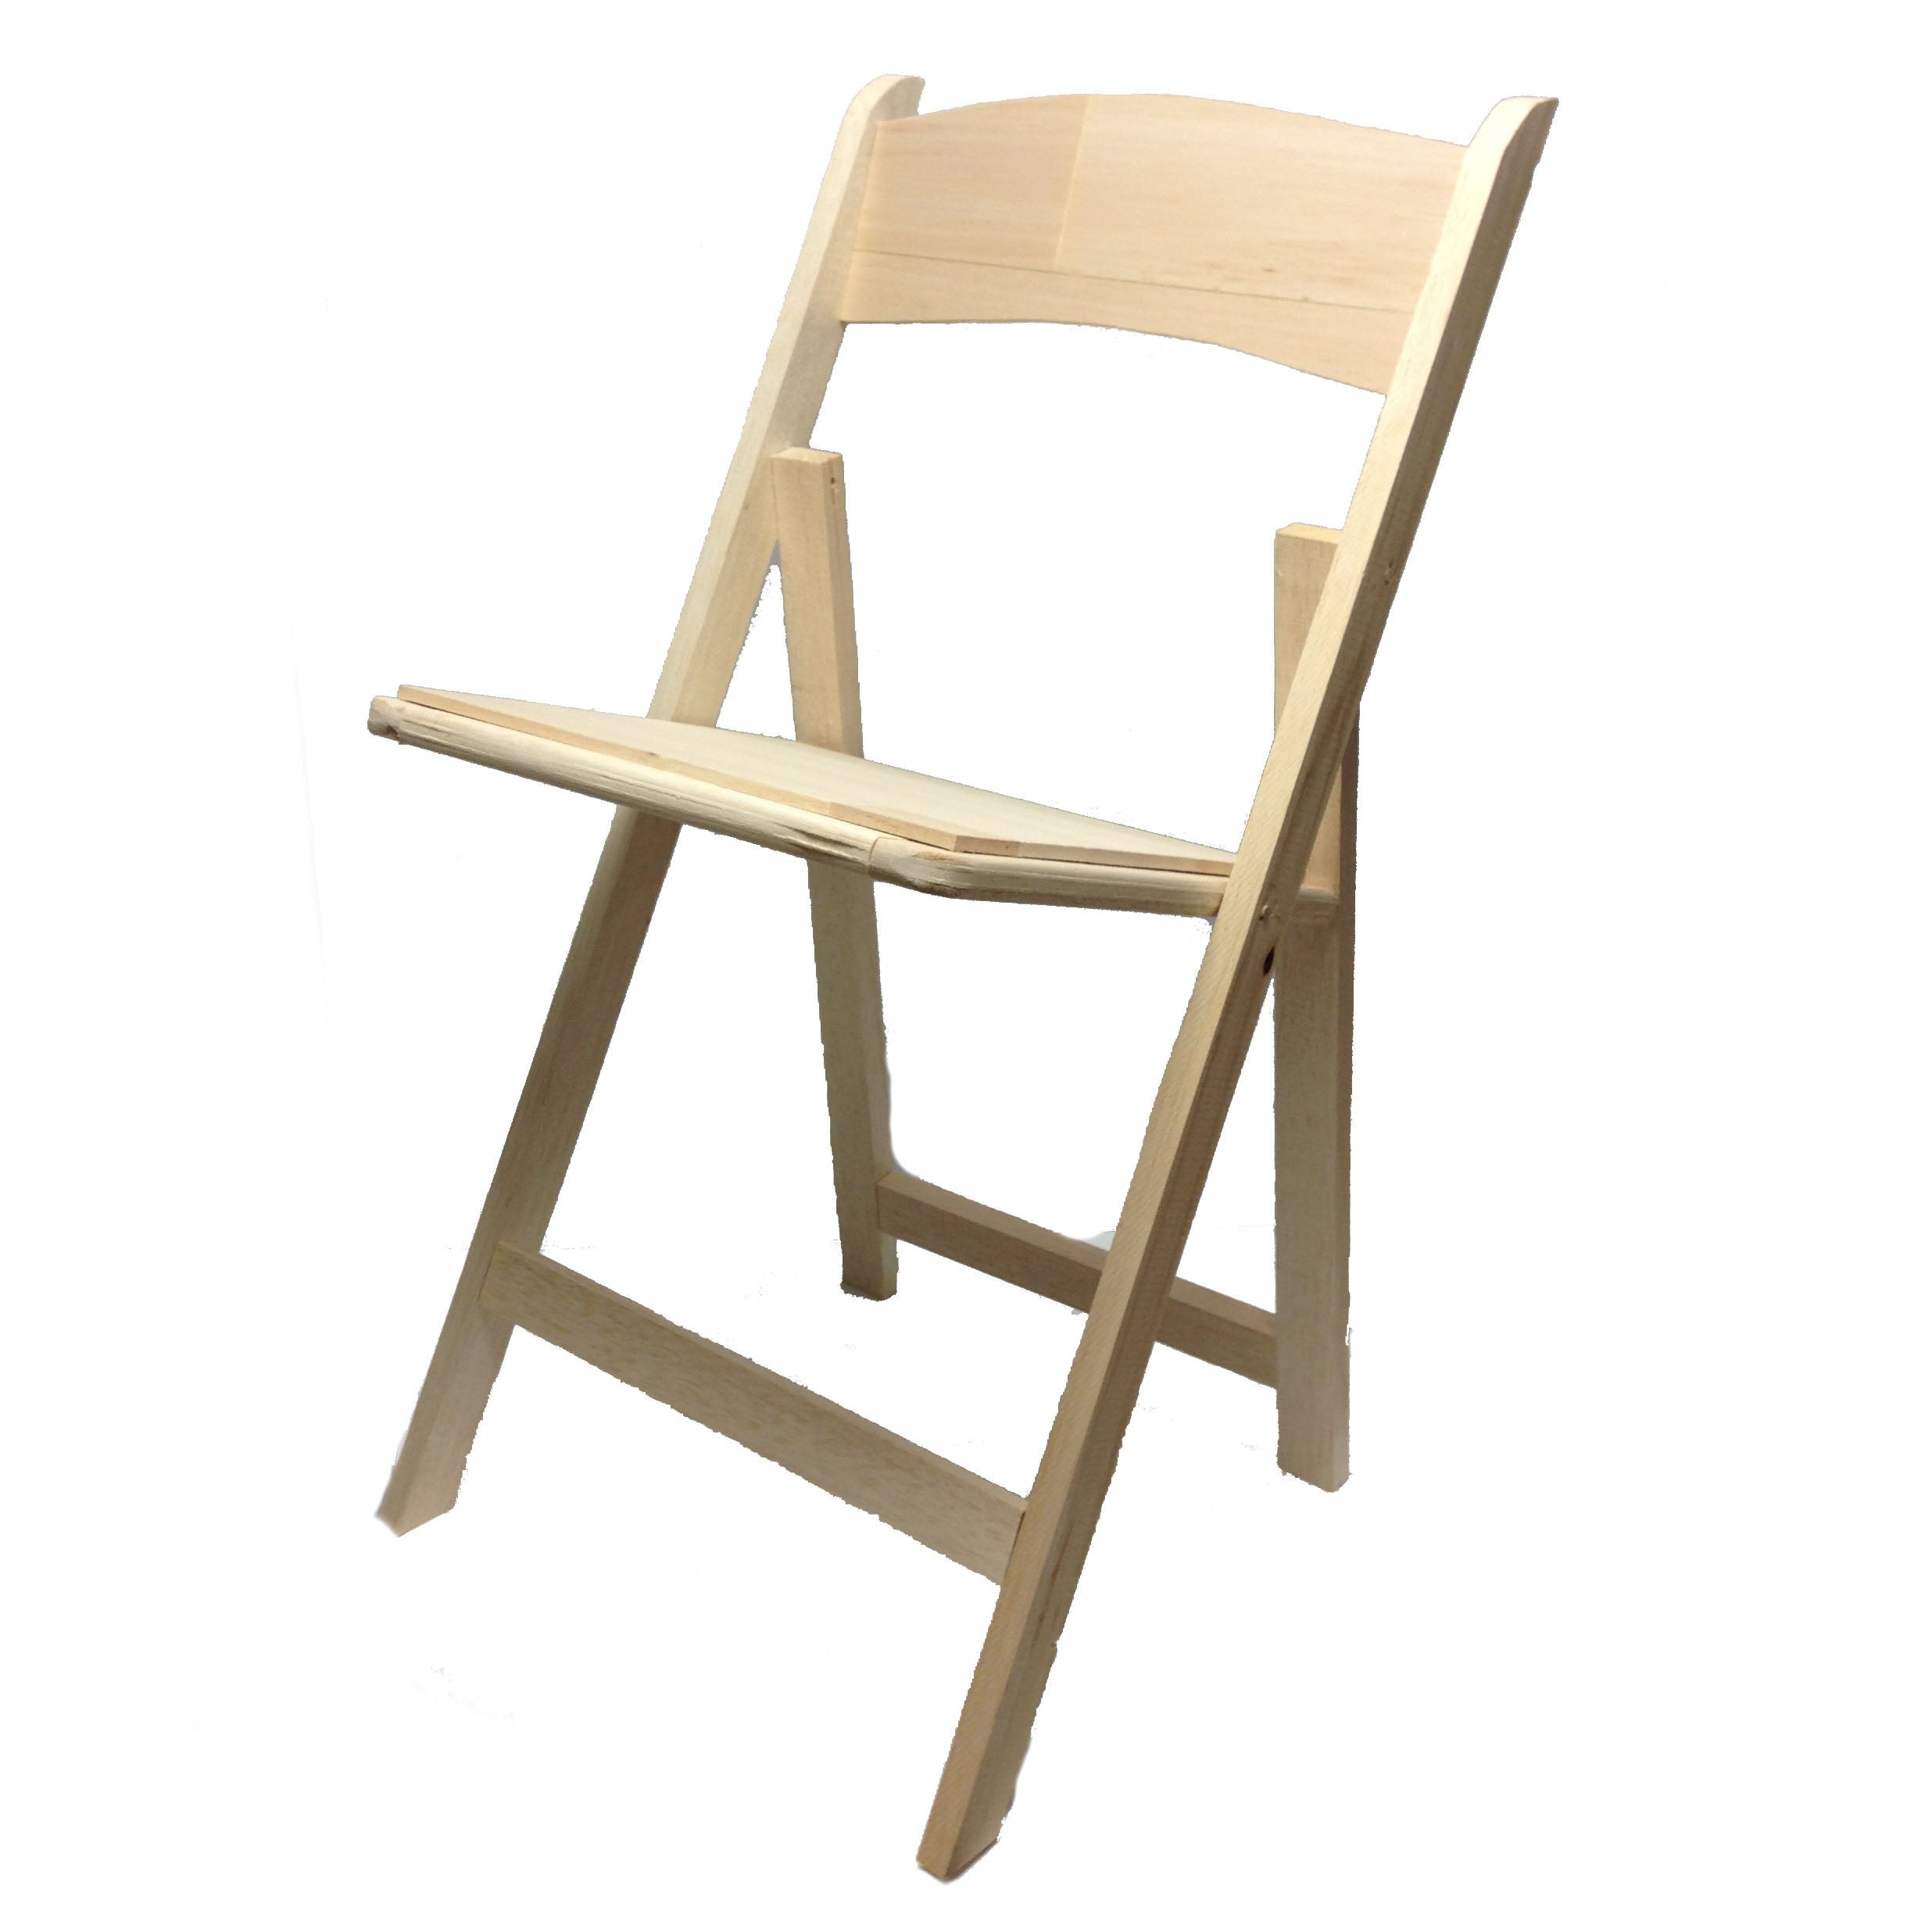 Breakaway Balsa Wood Folding Chair Smashable Stunt Action Prop